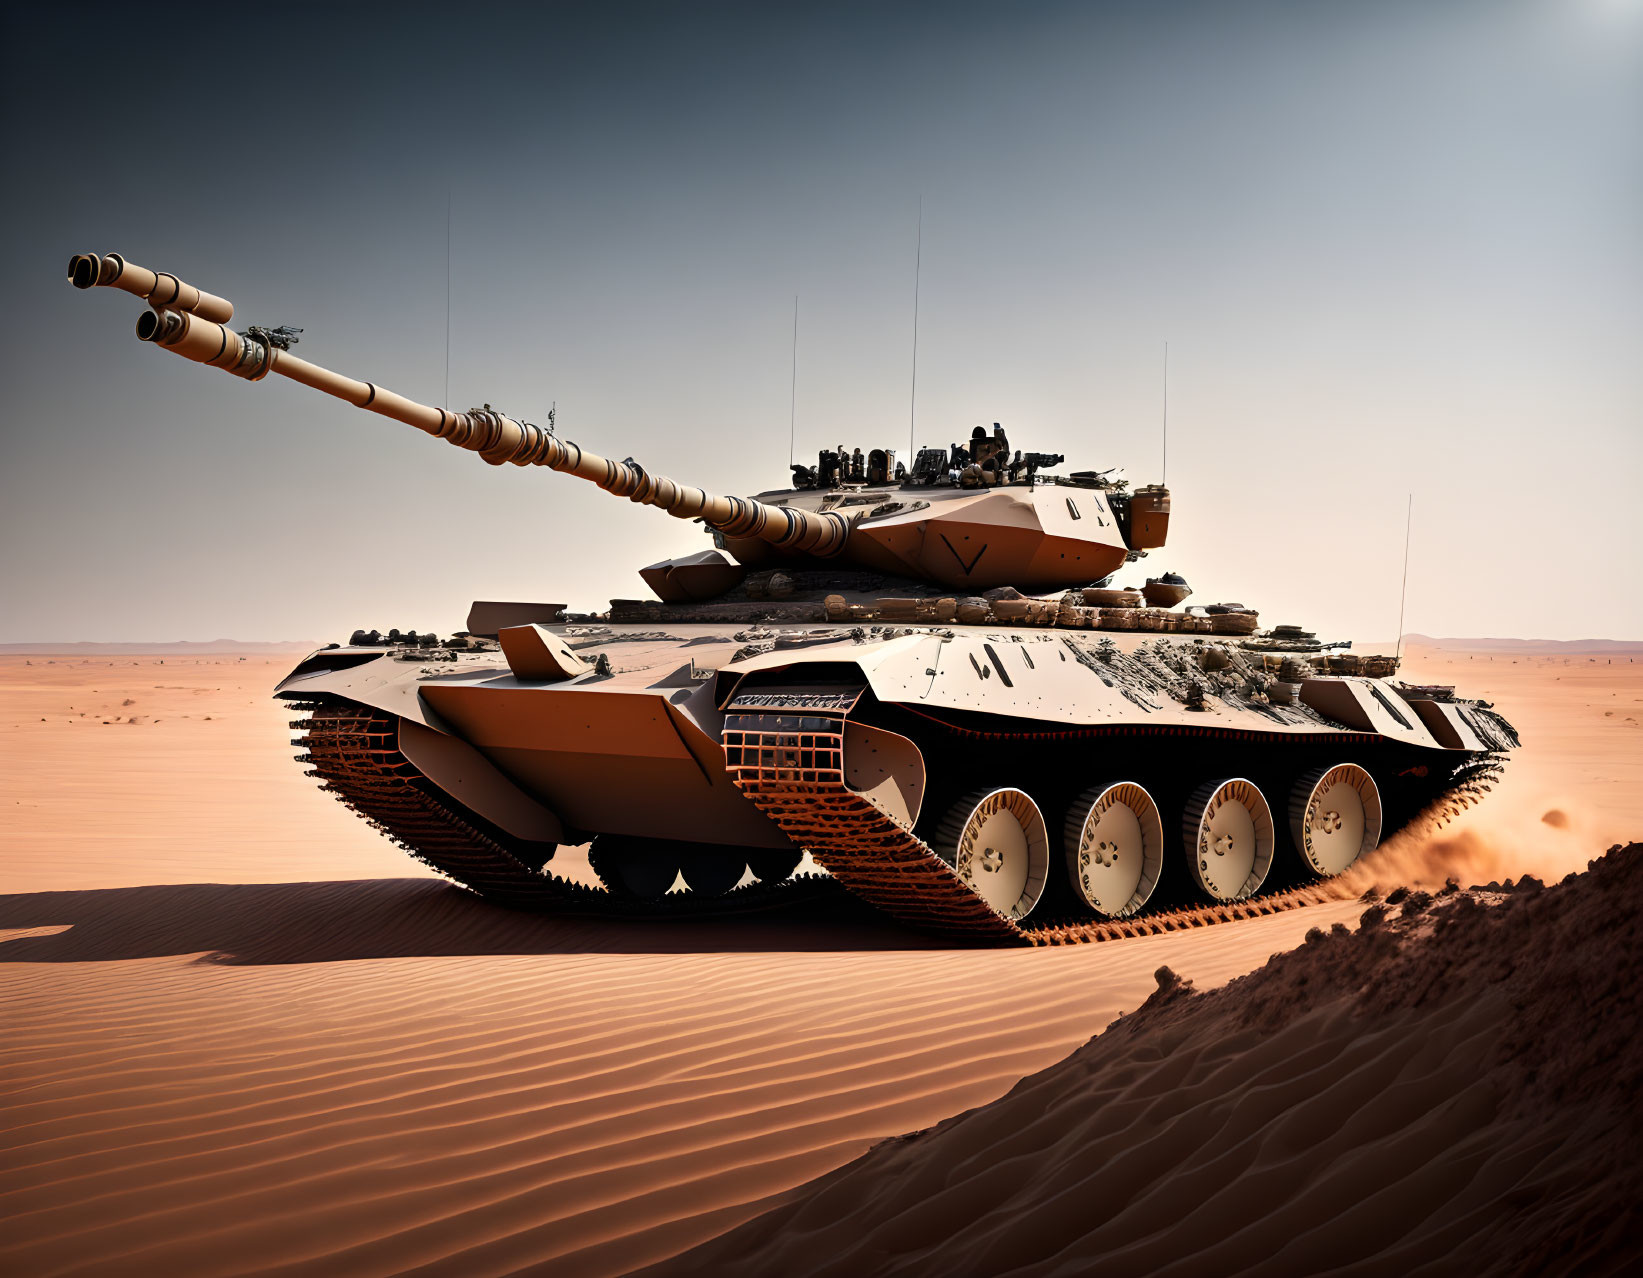 Advanced armored tank in futuristic desert setting